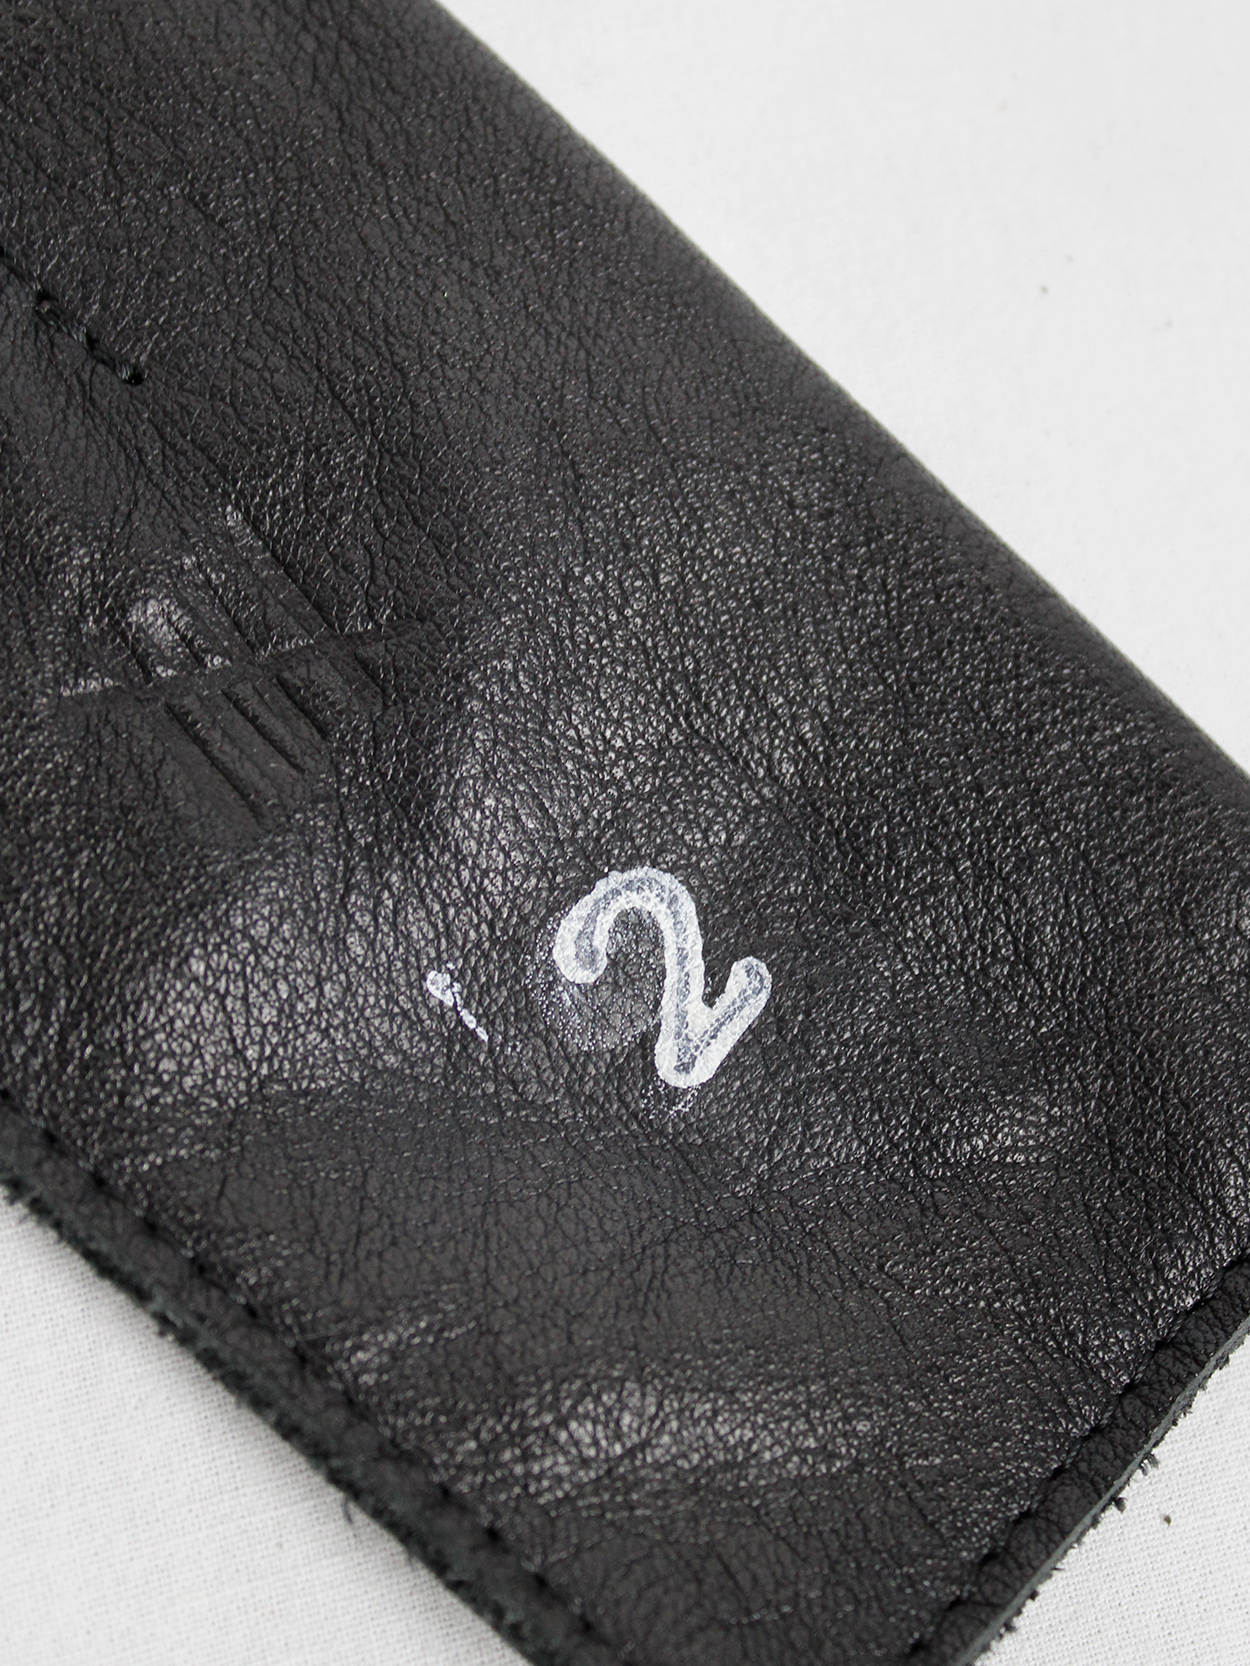 Nico Uytterhaegen black leather pouch with double zipper strap (3)